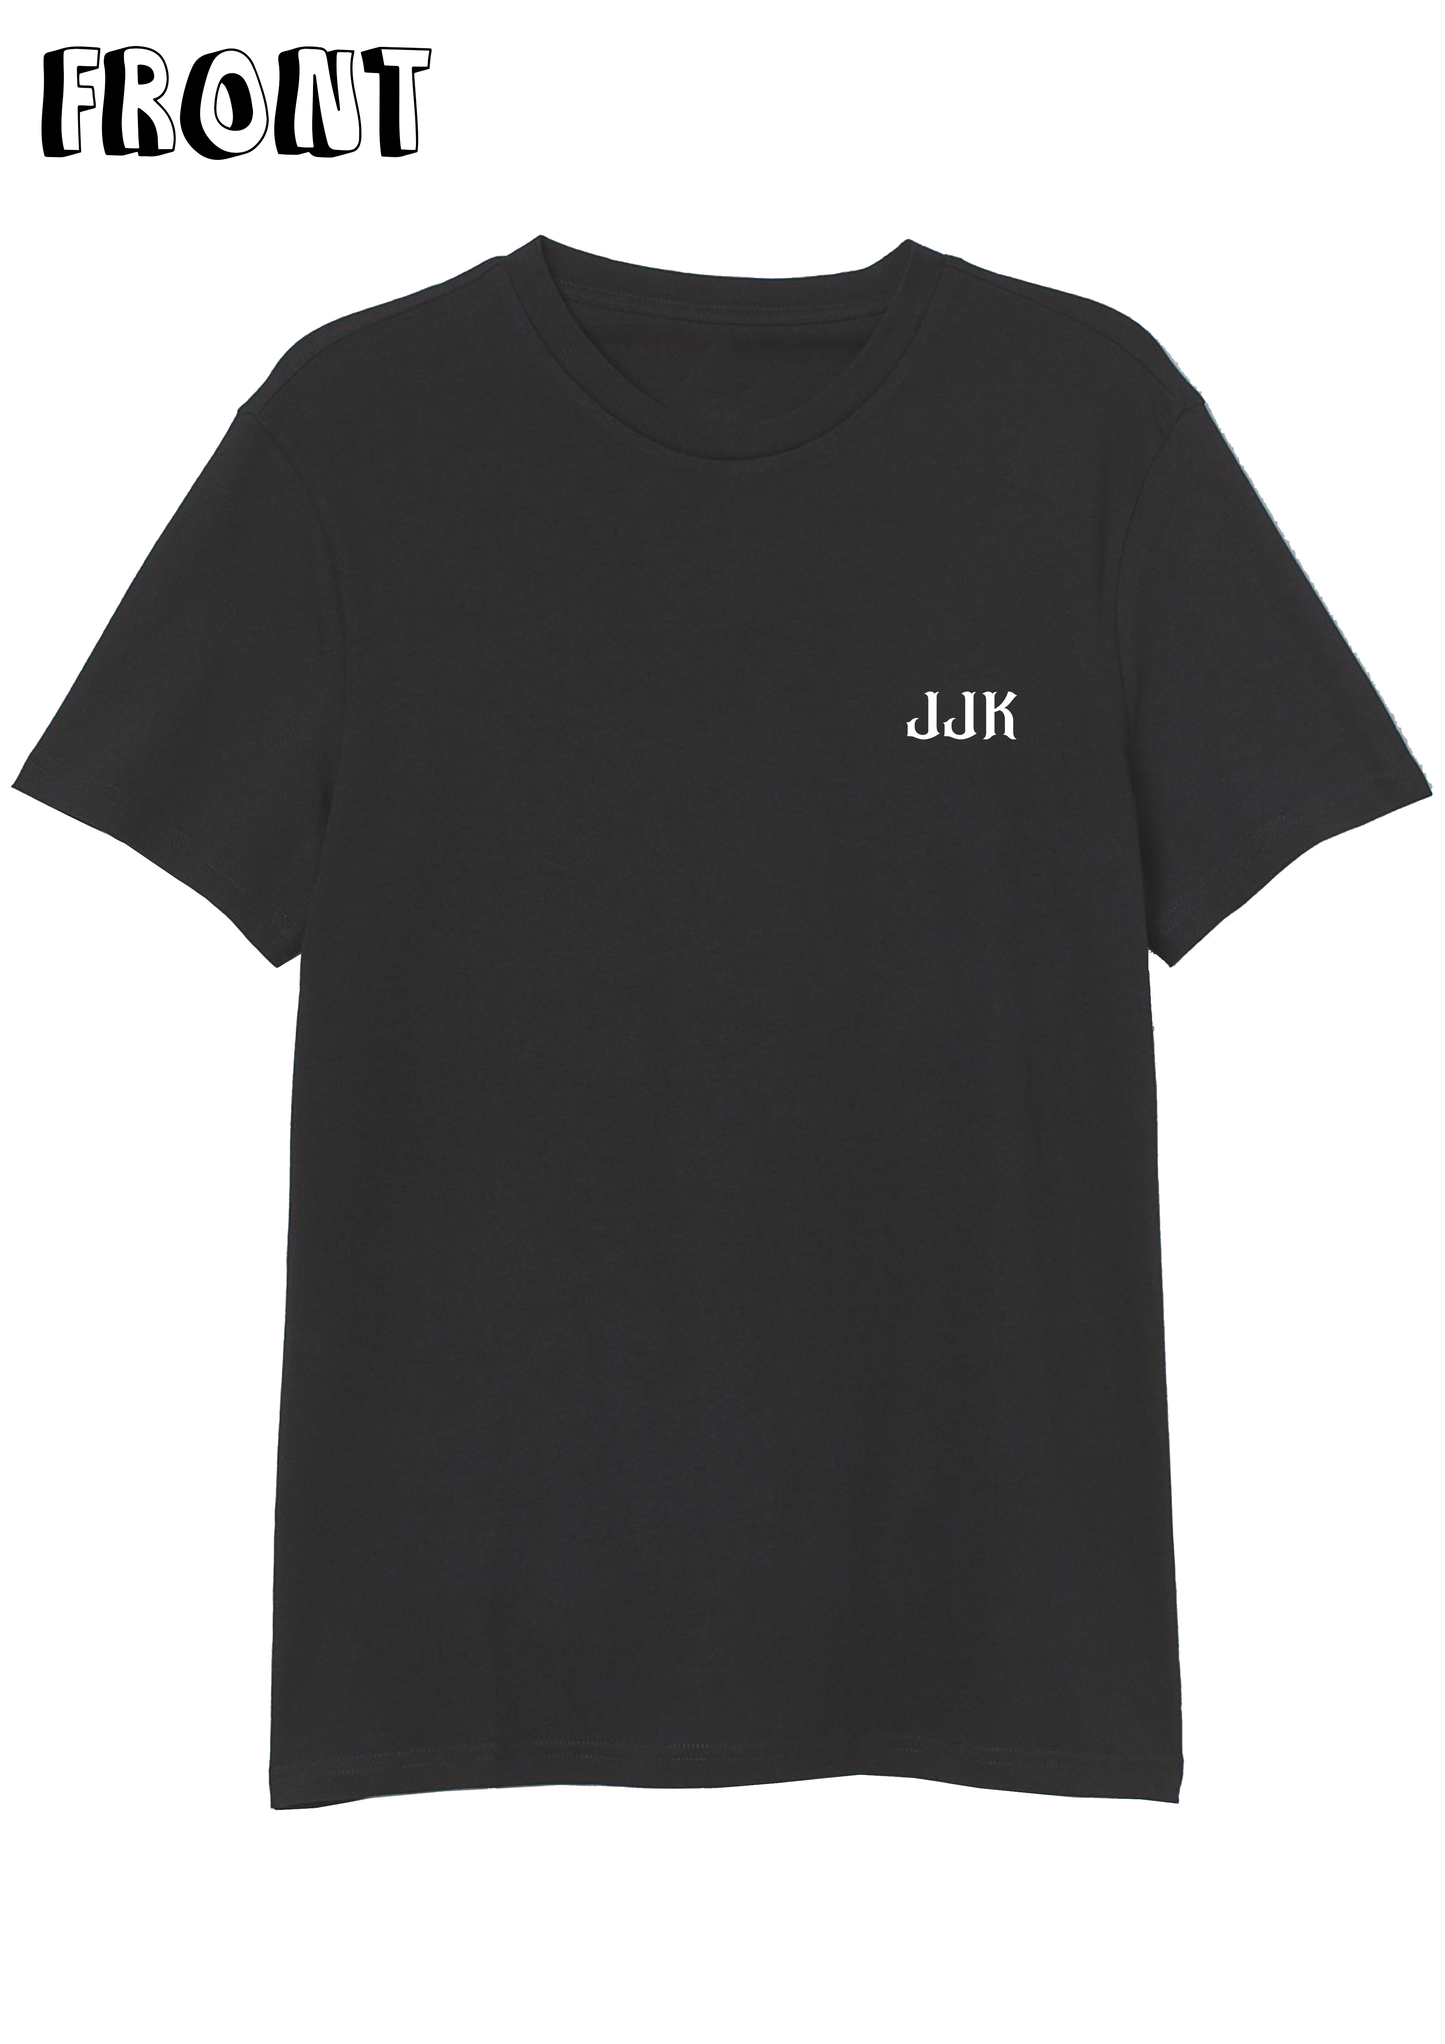 JJK Rather Be Dead Than Cool Vintage T-Shirt